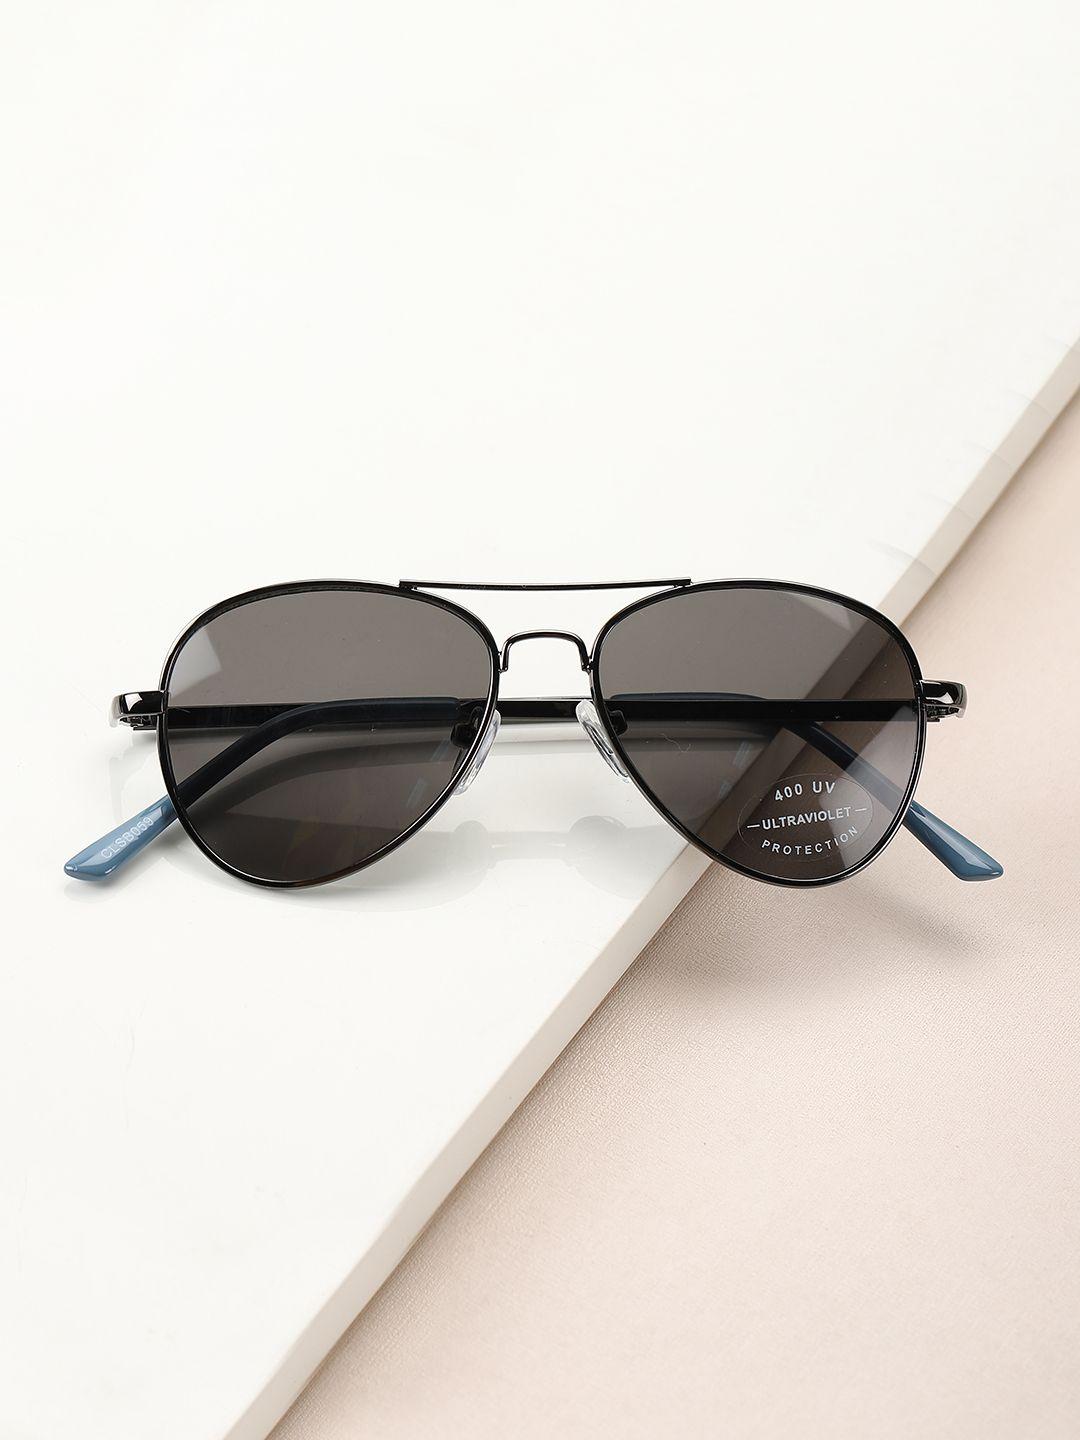 carlton london boys black lens & gunmetal-toned aviator sunglasses with uv protected lens